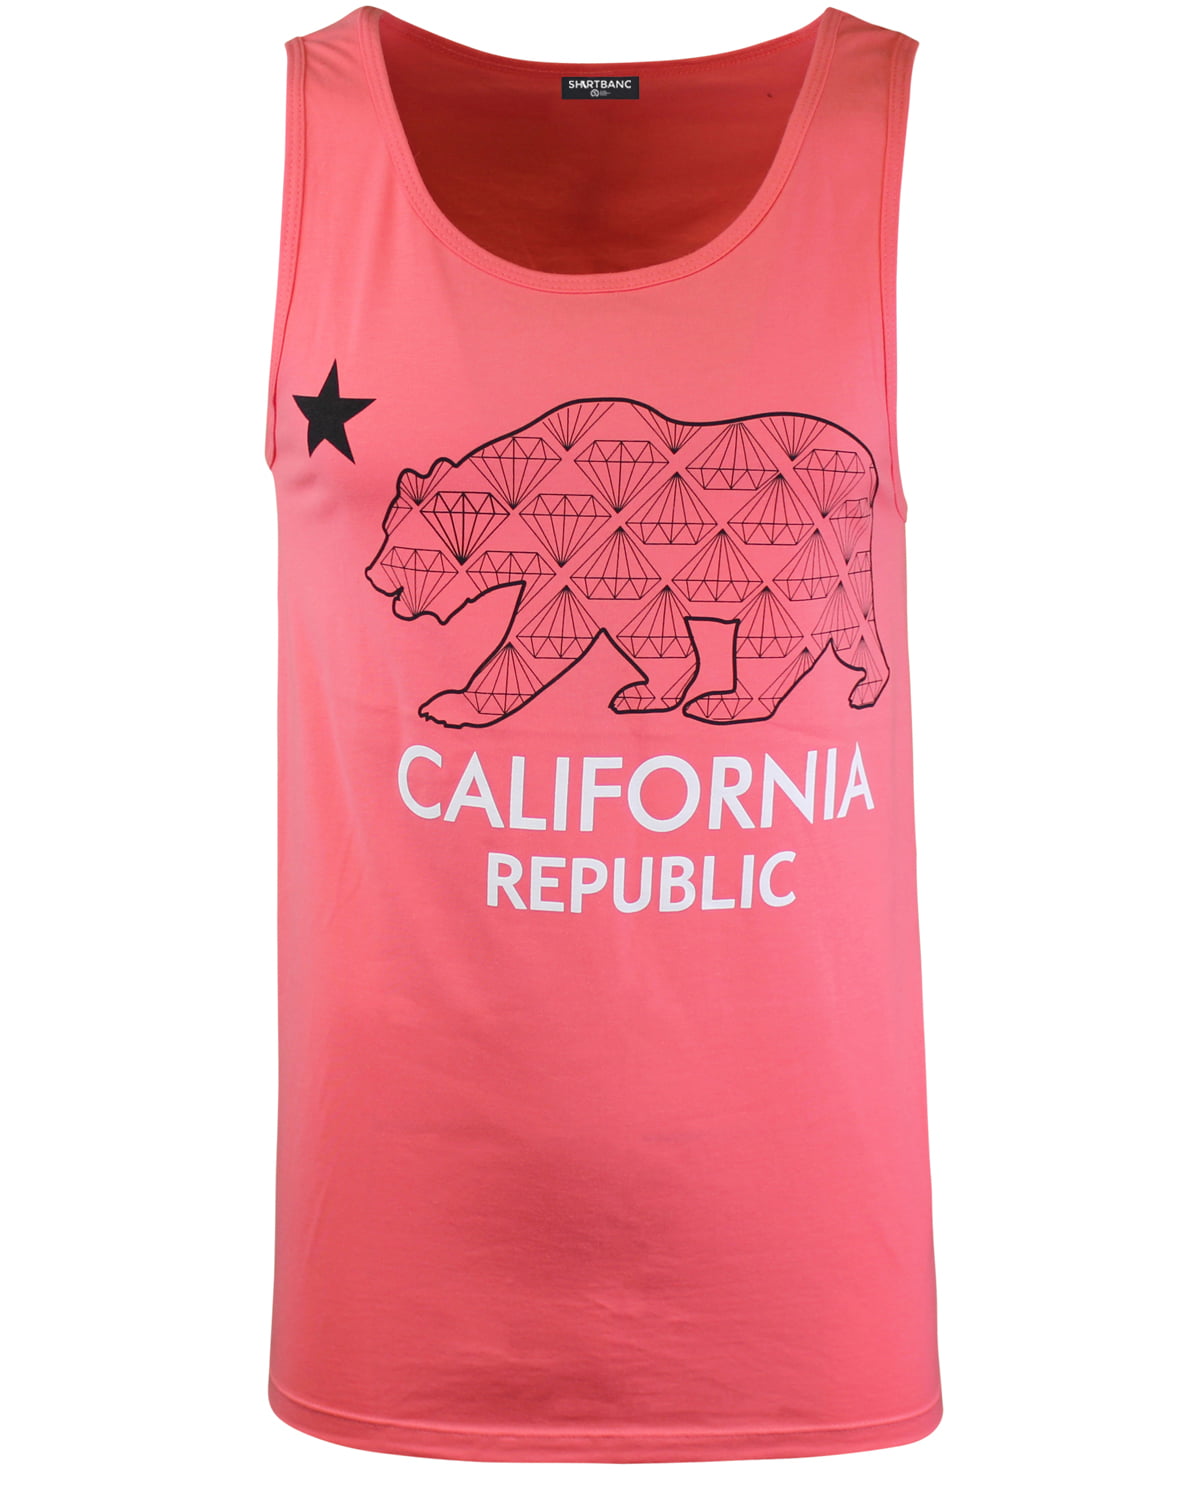 CALIFORNIA Tank Top CALI REPUBLIC State Flag Bear Tee Adult S-2XL CA West Coast